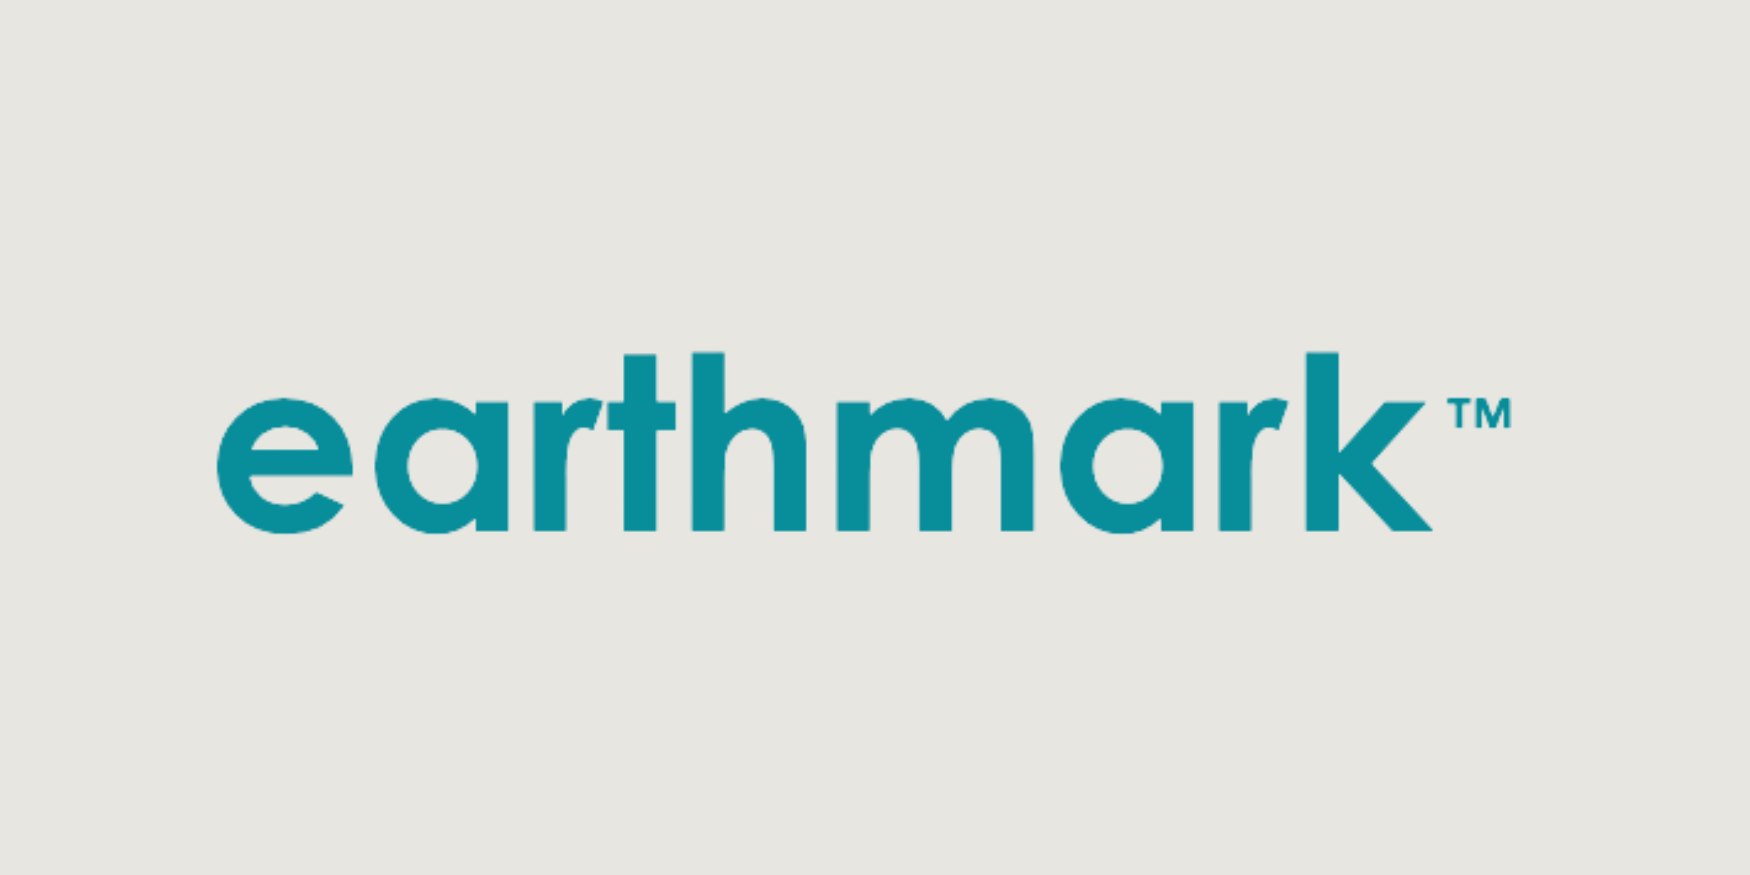 Kindred for Business announces Earthmark Partnership